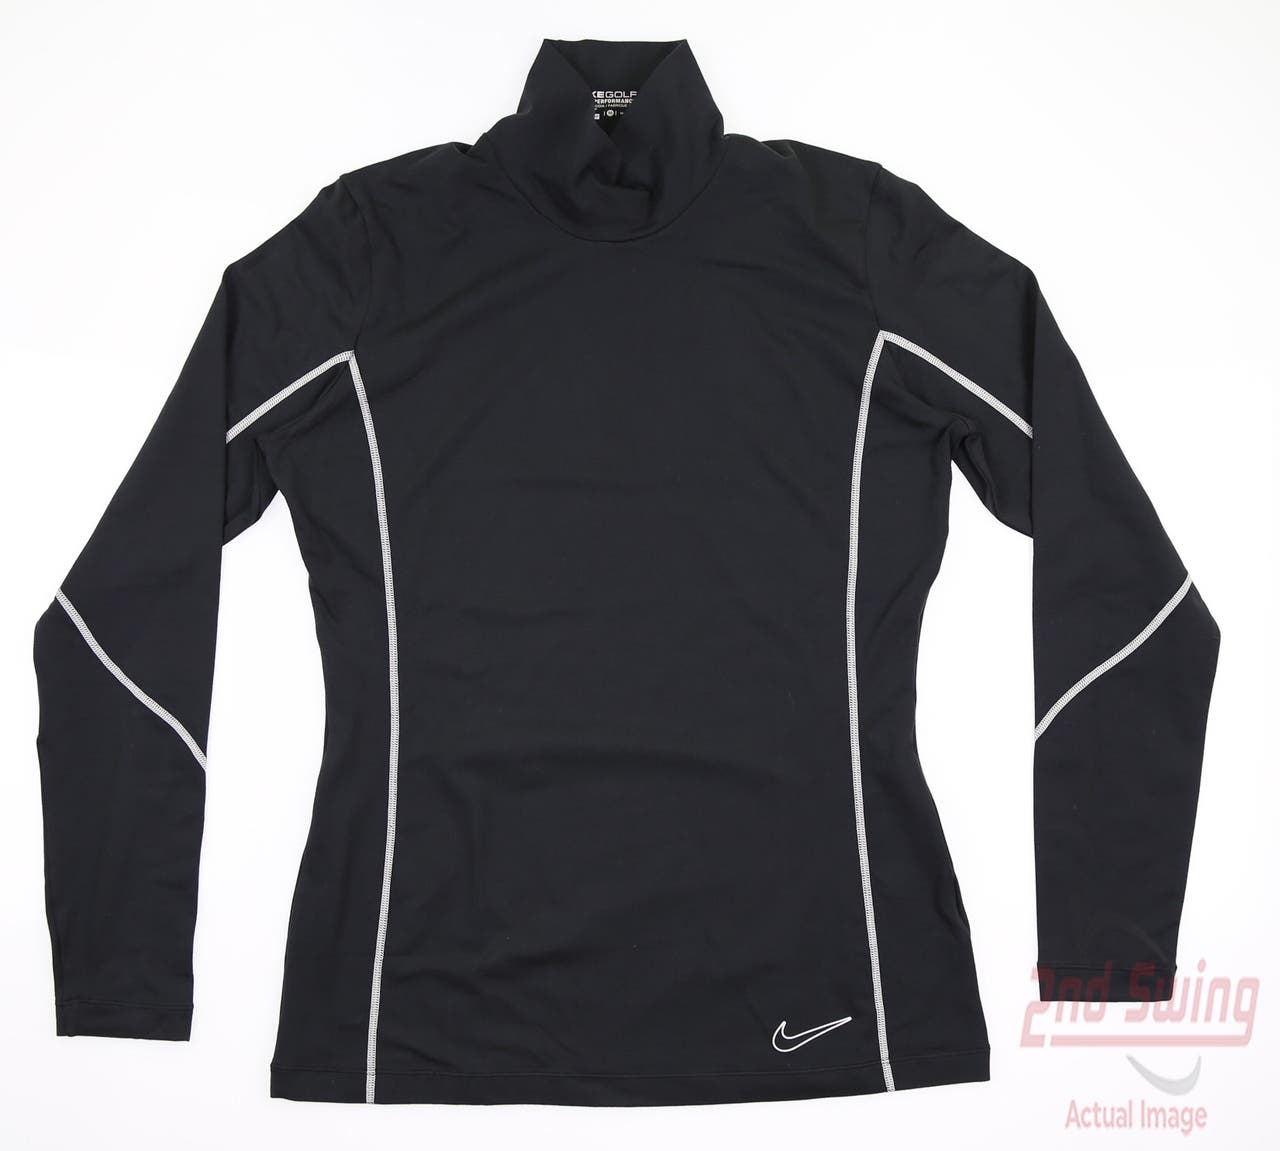 New Womens Nike Golf Base Layer Medium M Black MSRP $80 487790